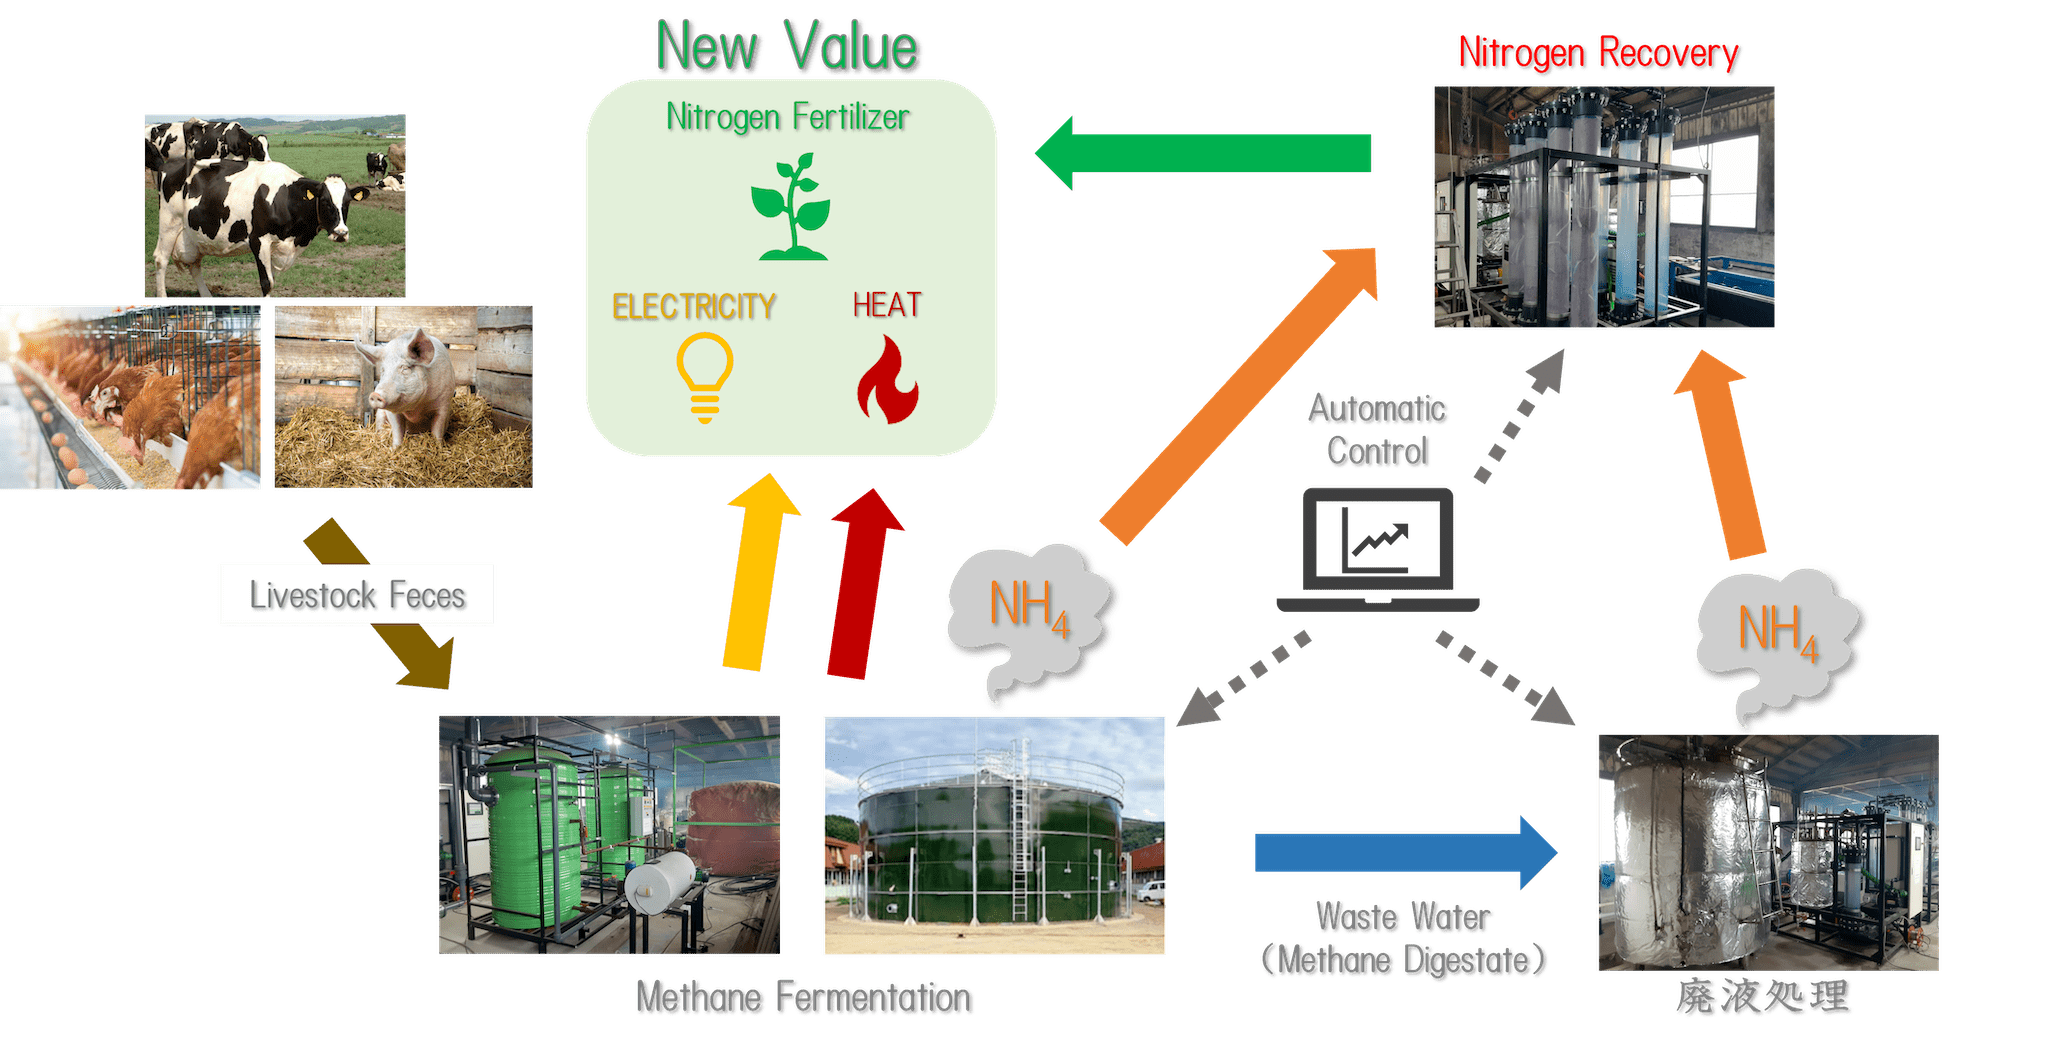 Poultry manure methane fermentation power generation and nitrogen fertilizer production